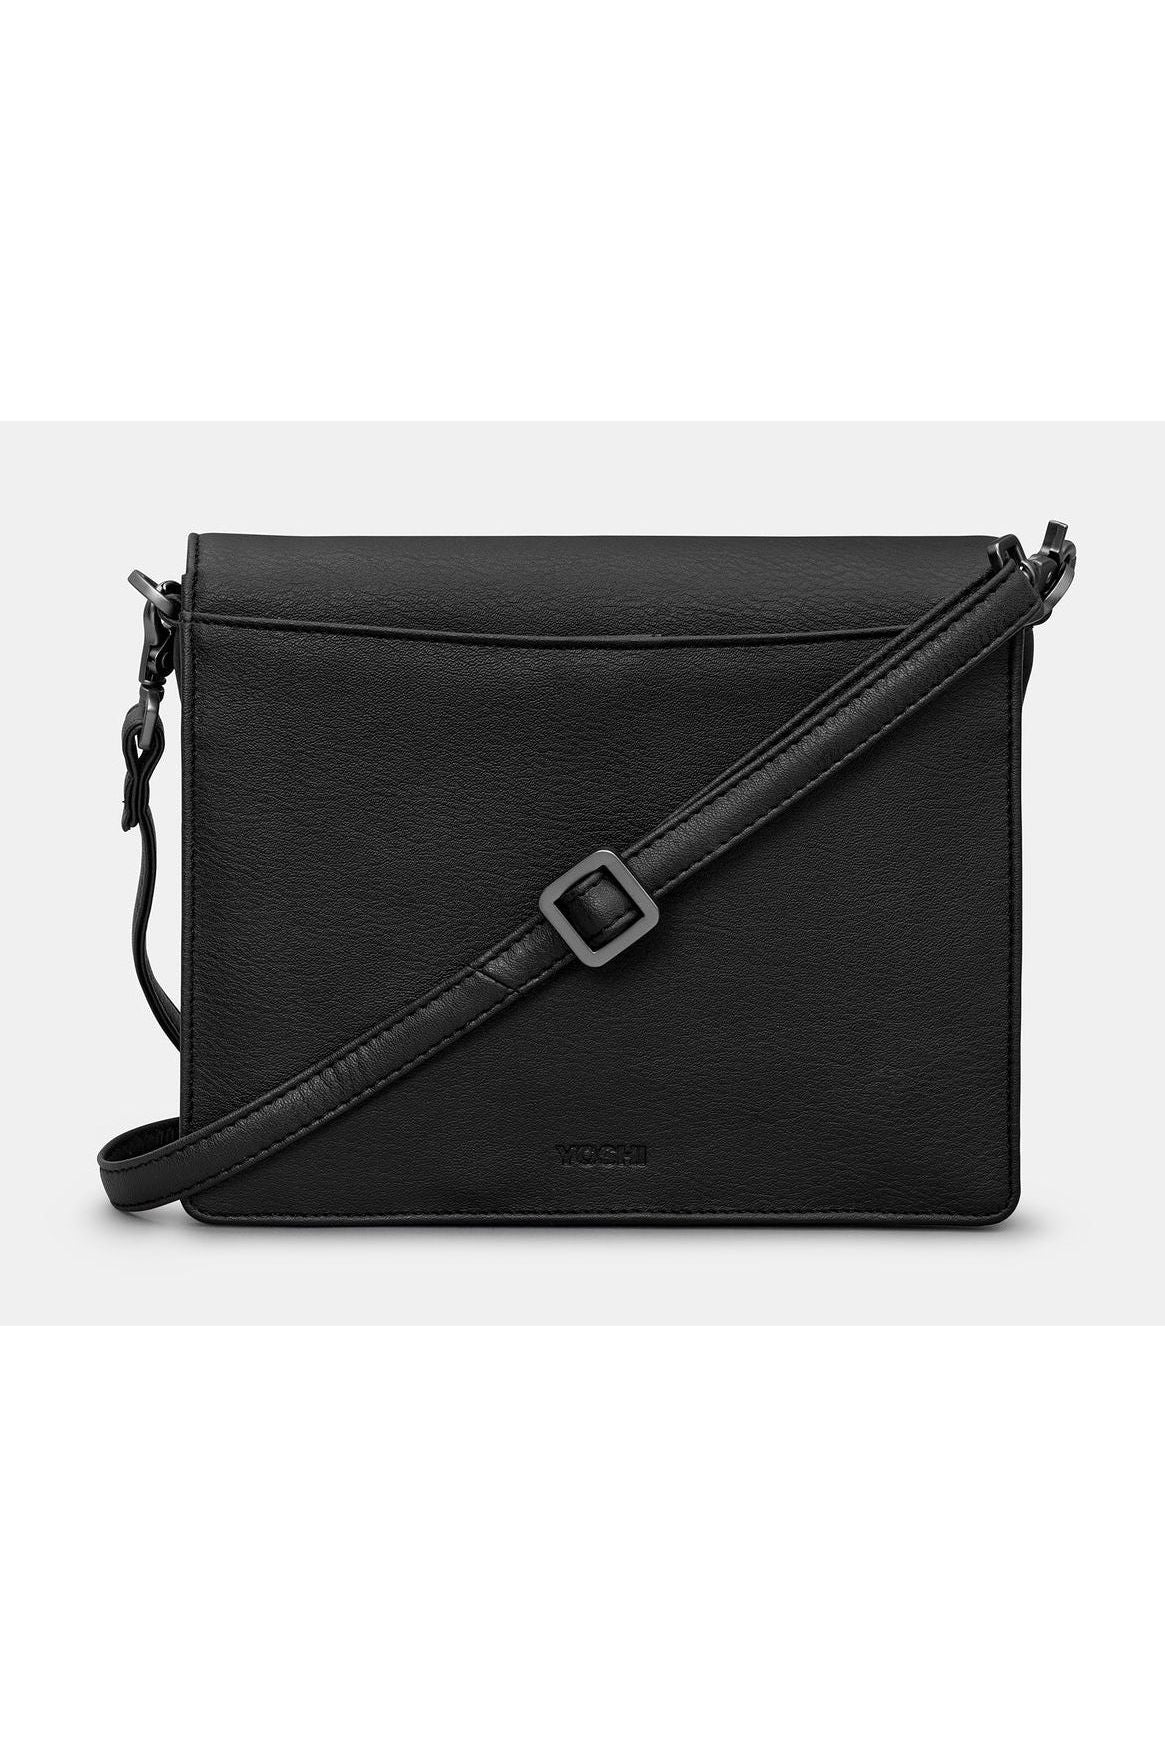 Yoshi Dickens Bookworm Multi Gusset Flap over Handbag in black